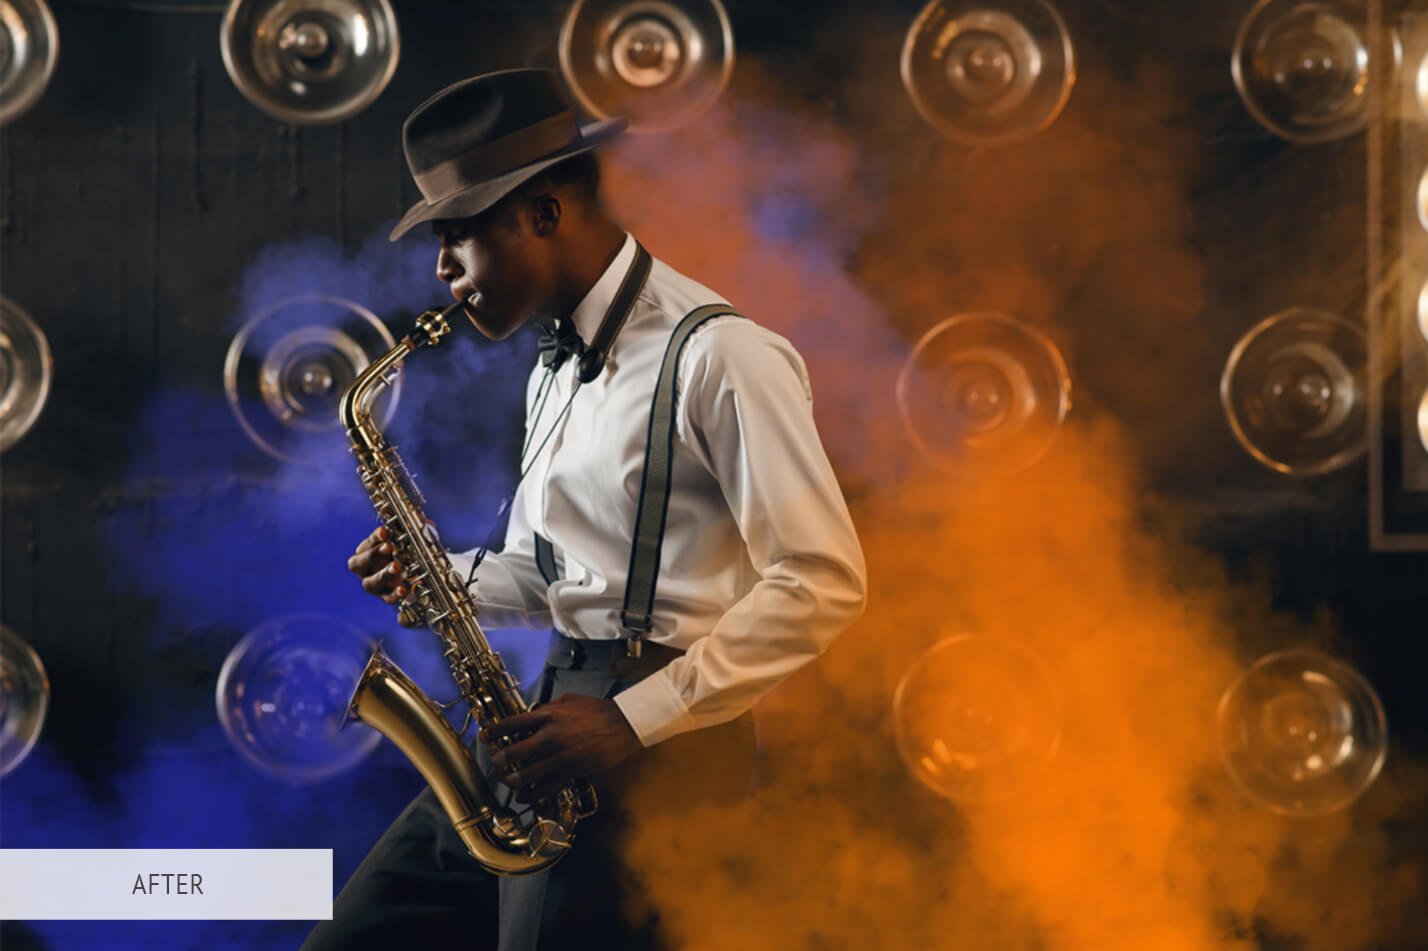 black jazzman in hat plays the saxophone on stage lnhtgd5 86